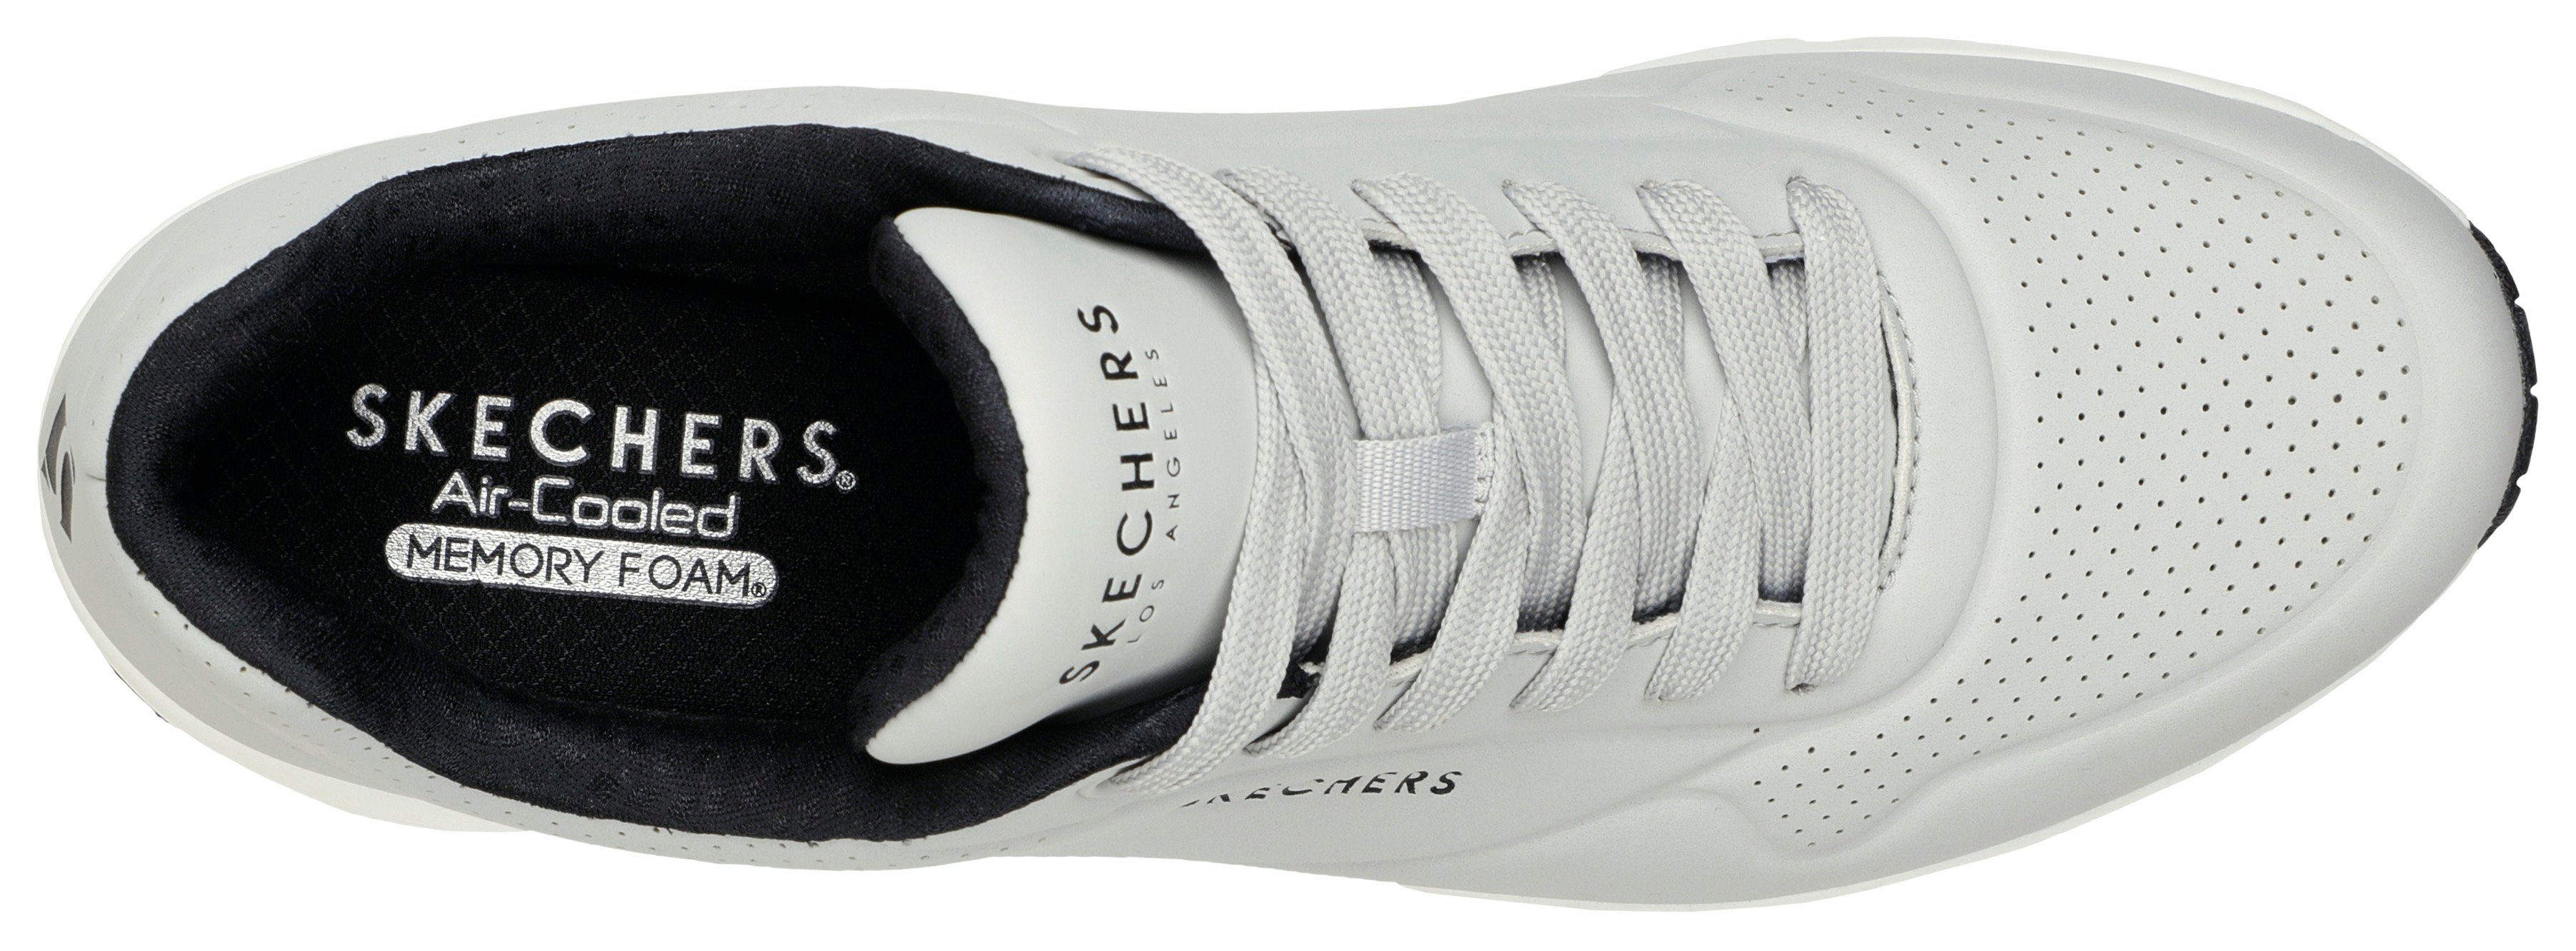 Memory Foam Uno hellgrau-schwarz Sneaker Air-Cooled mit Skechers